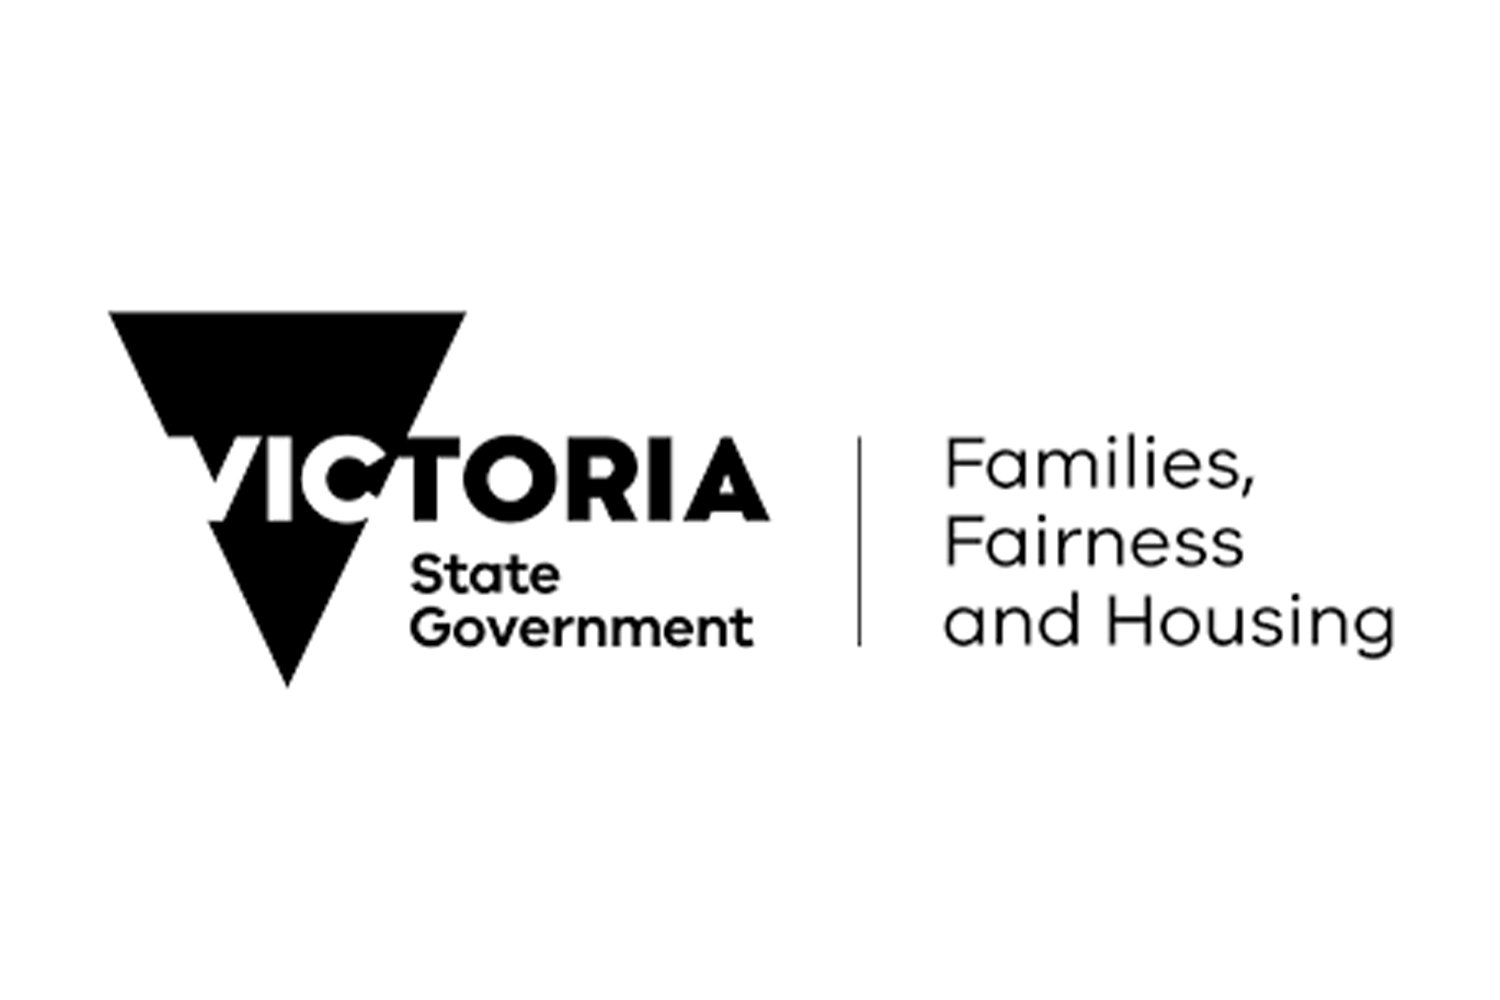 Victoria state government (dffh).jpg